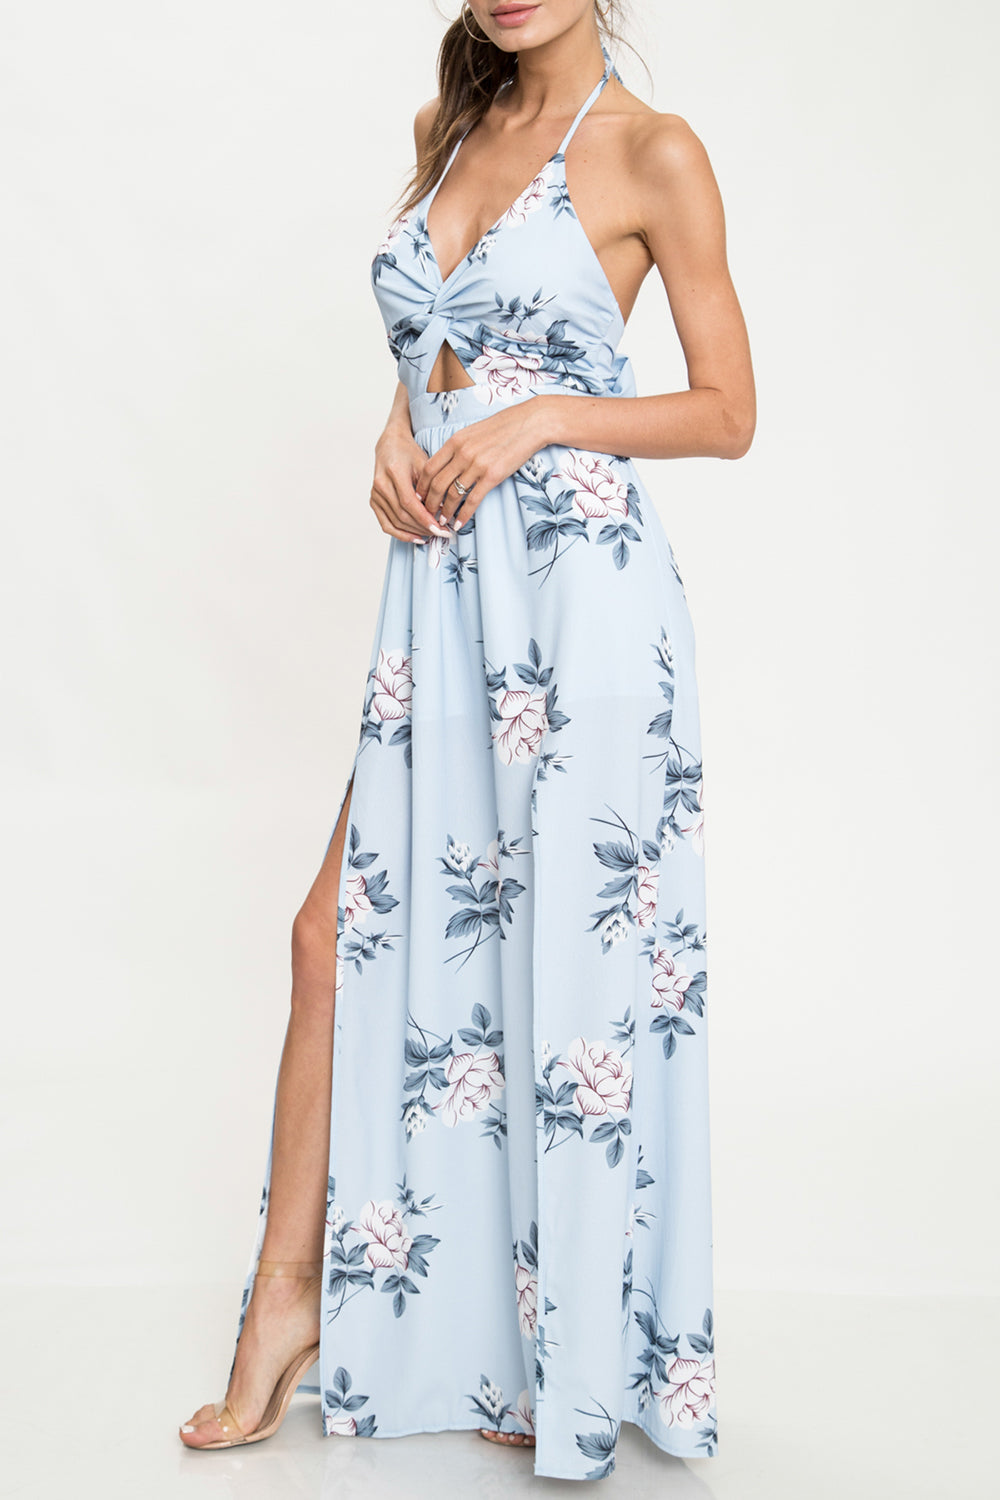 Elegant Blue Floral Print Cut Out Tie-Up Maxi Dress with Slit